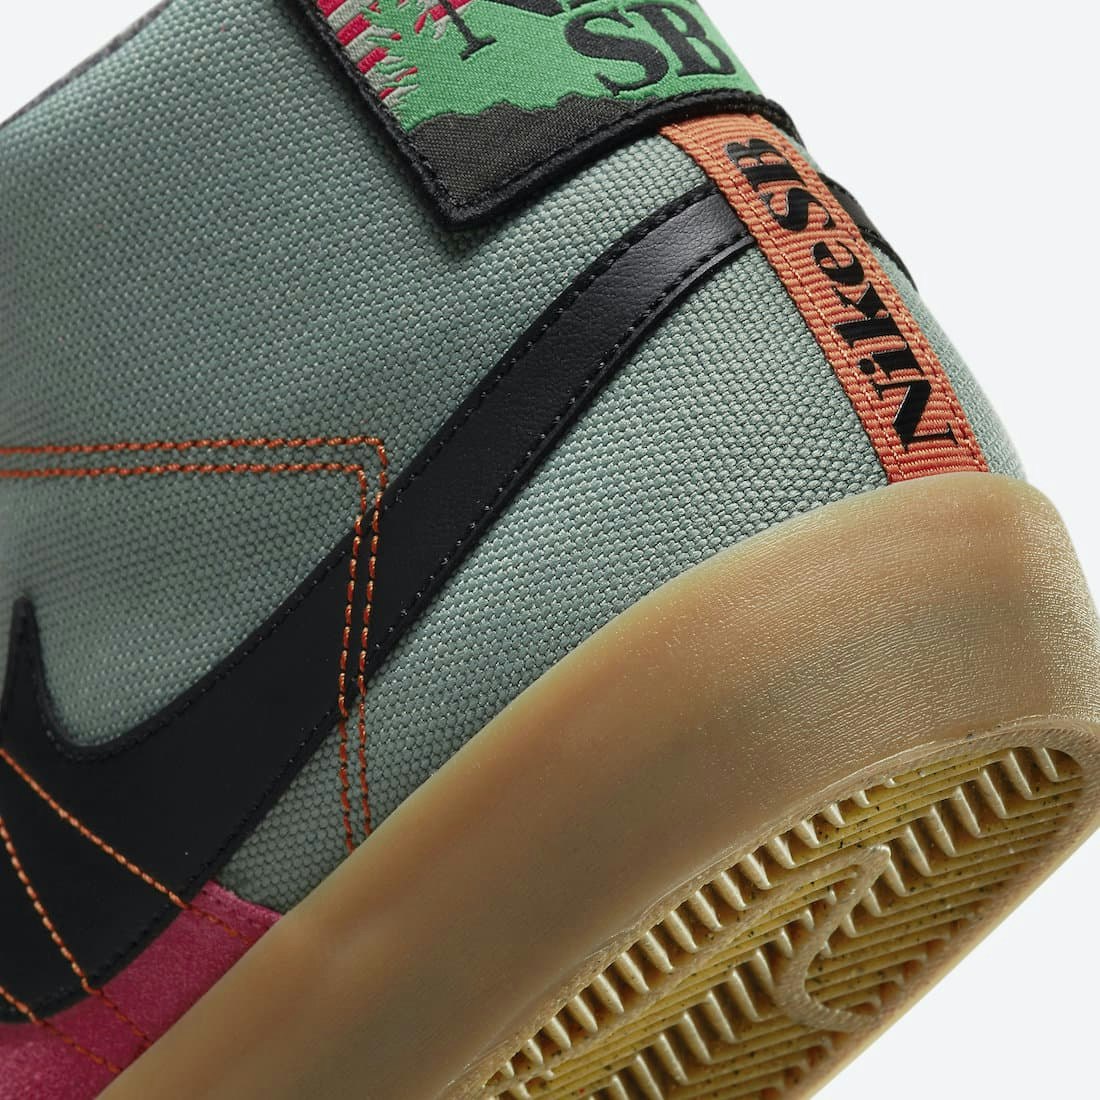 Nike SB Blazer Mid Premium "Acclimate Pack"